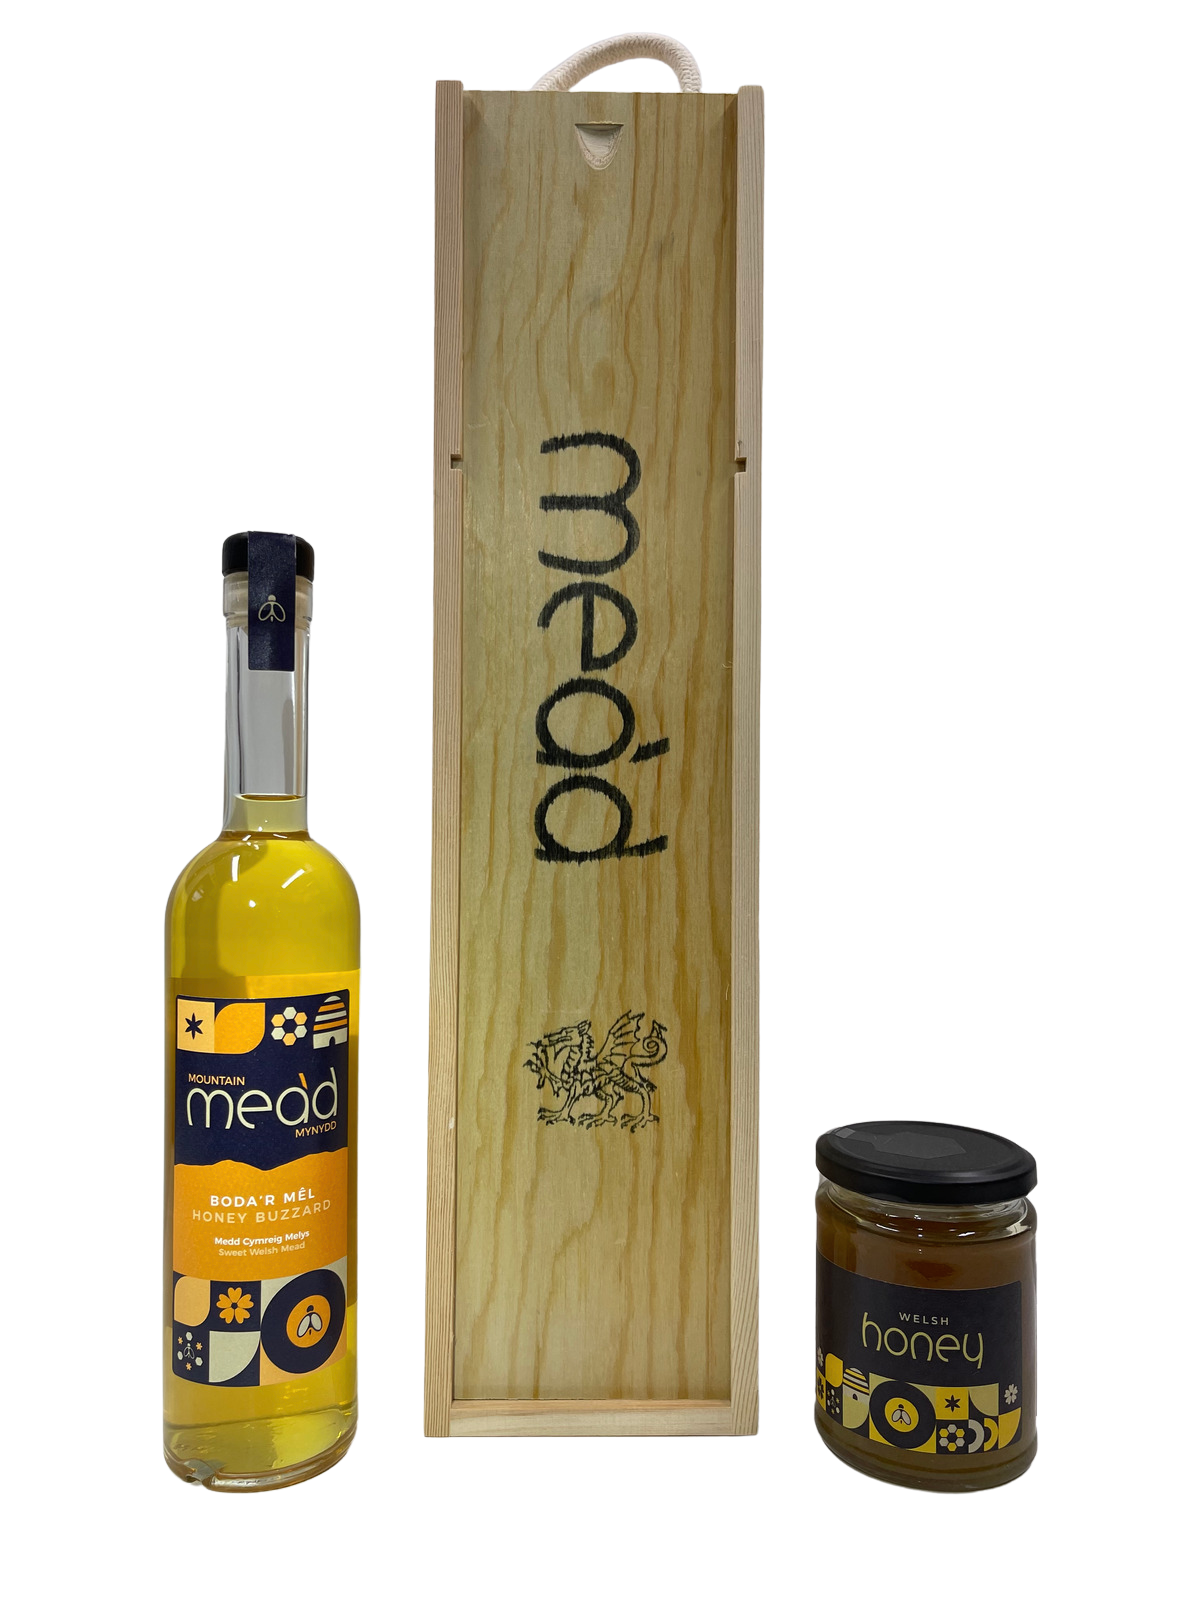 Sweet Mead in a Gift Box with Jar of Welsh Honey:  Boda’r Mêl - Honey Buzzard 500ml